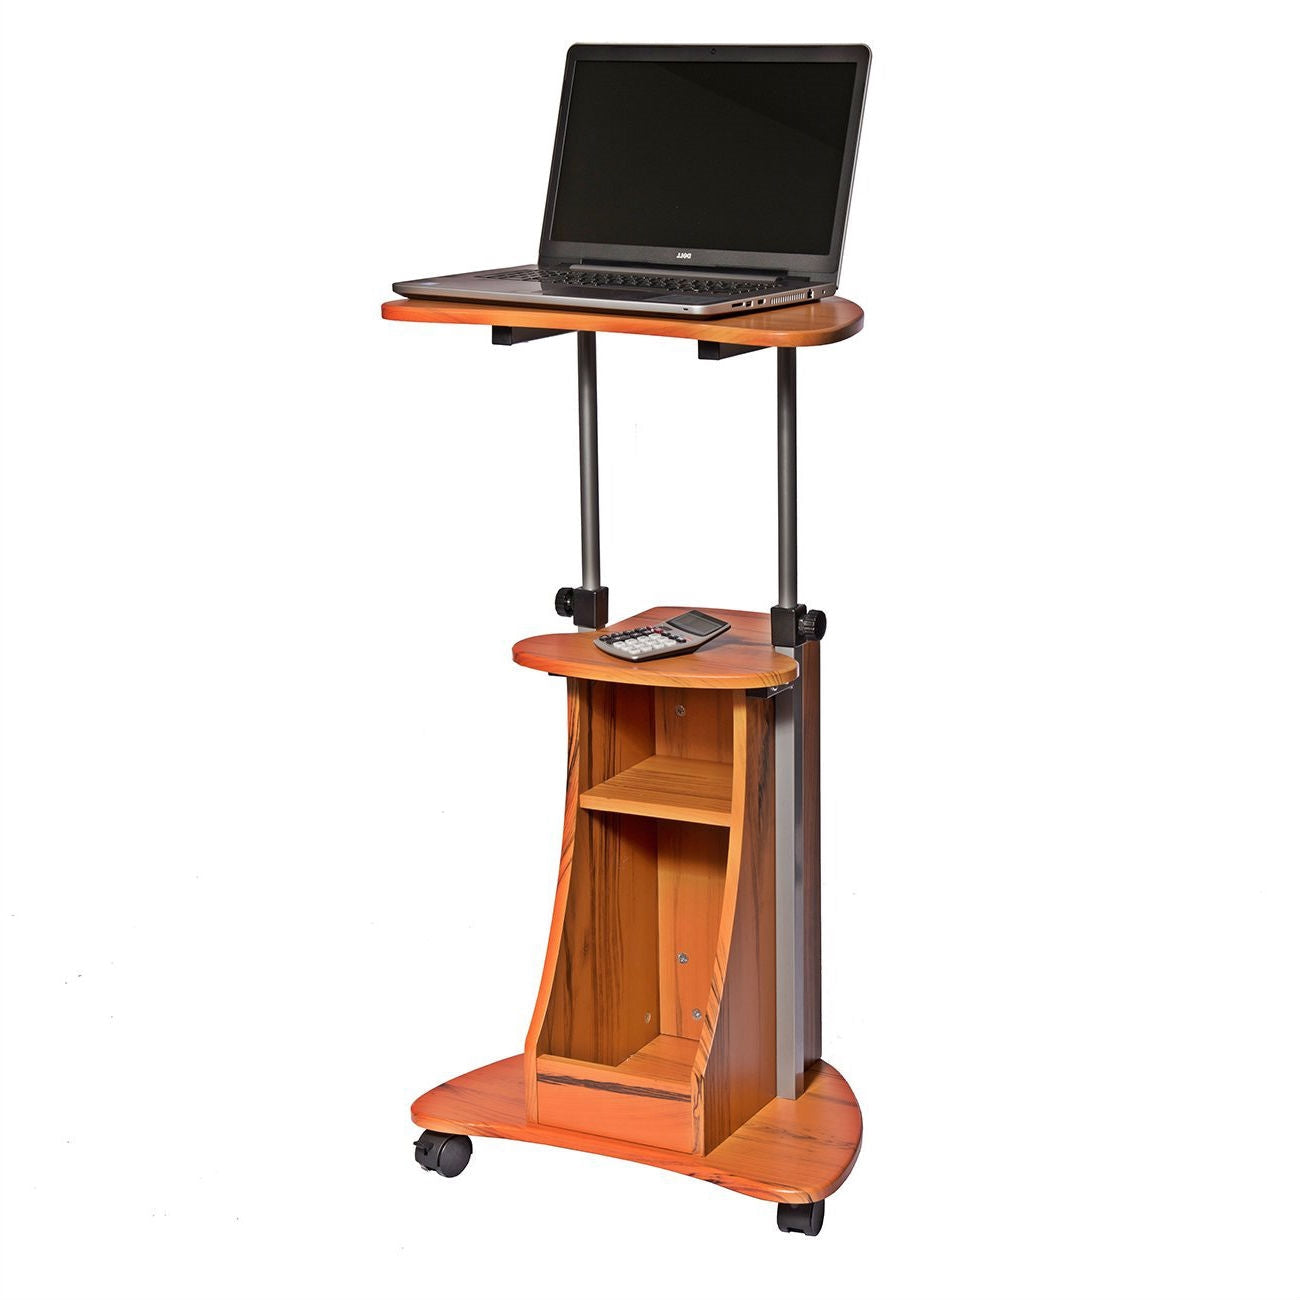 Office > Computer Desks - Mobile Sit Down Stand Up Desk Adjustable Height Laptop Cart In Wood-grain Finish